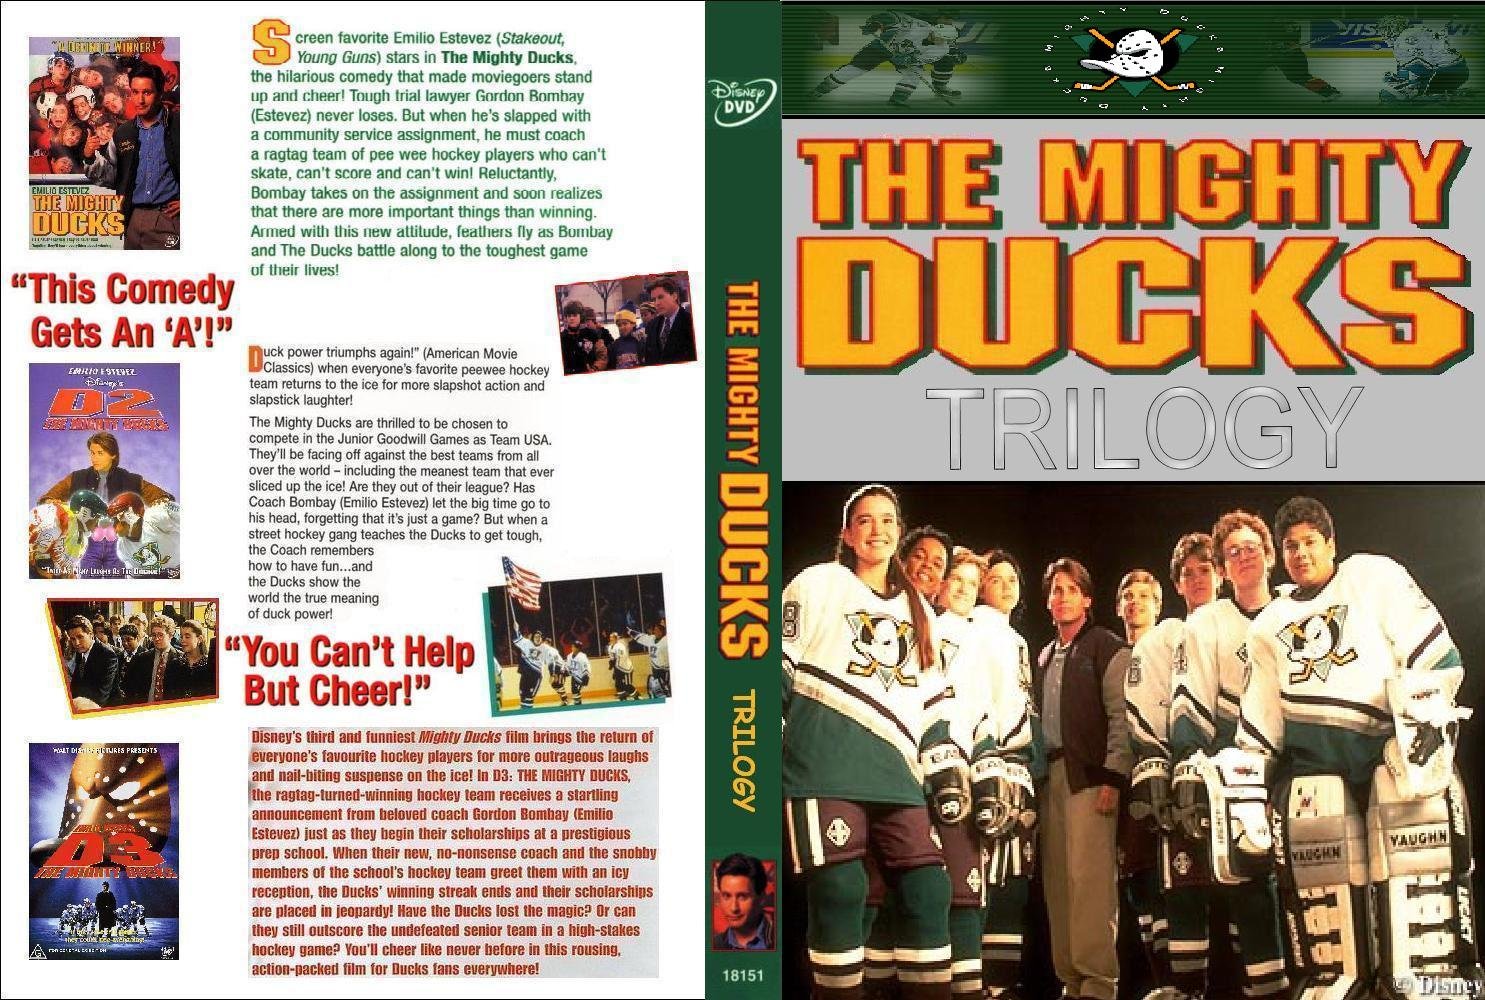 The Mighty Ducks DVD Box Set (DVD) 